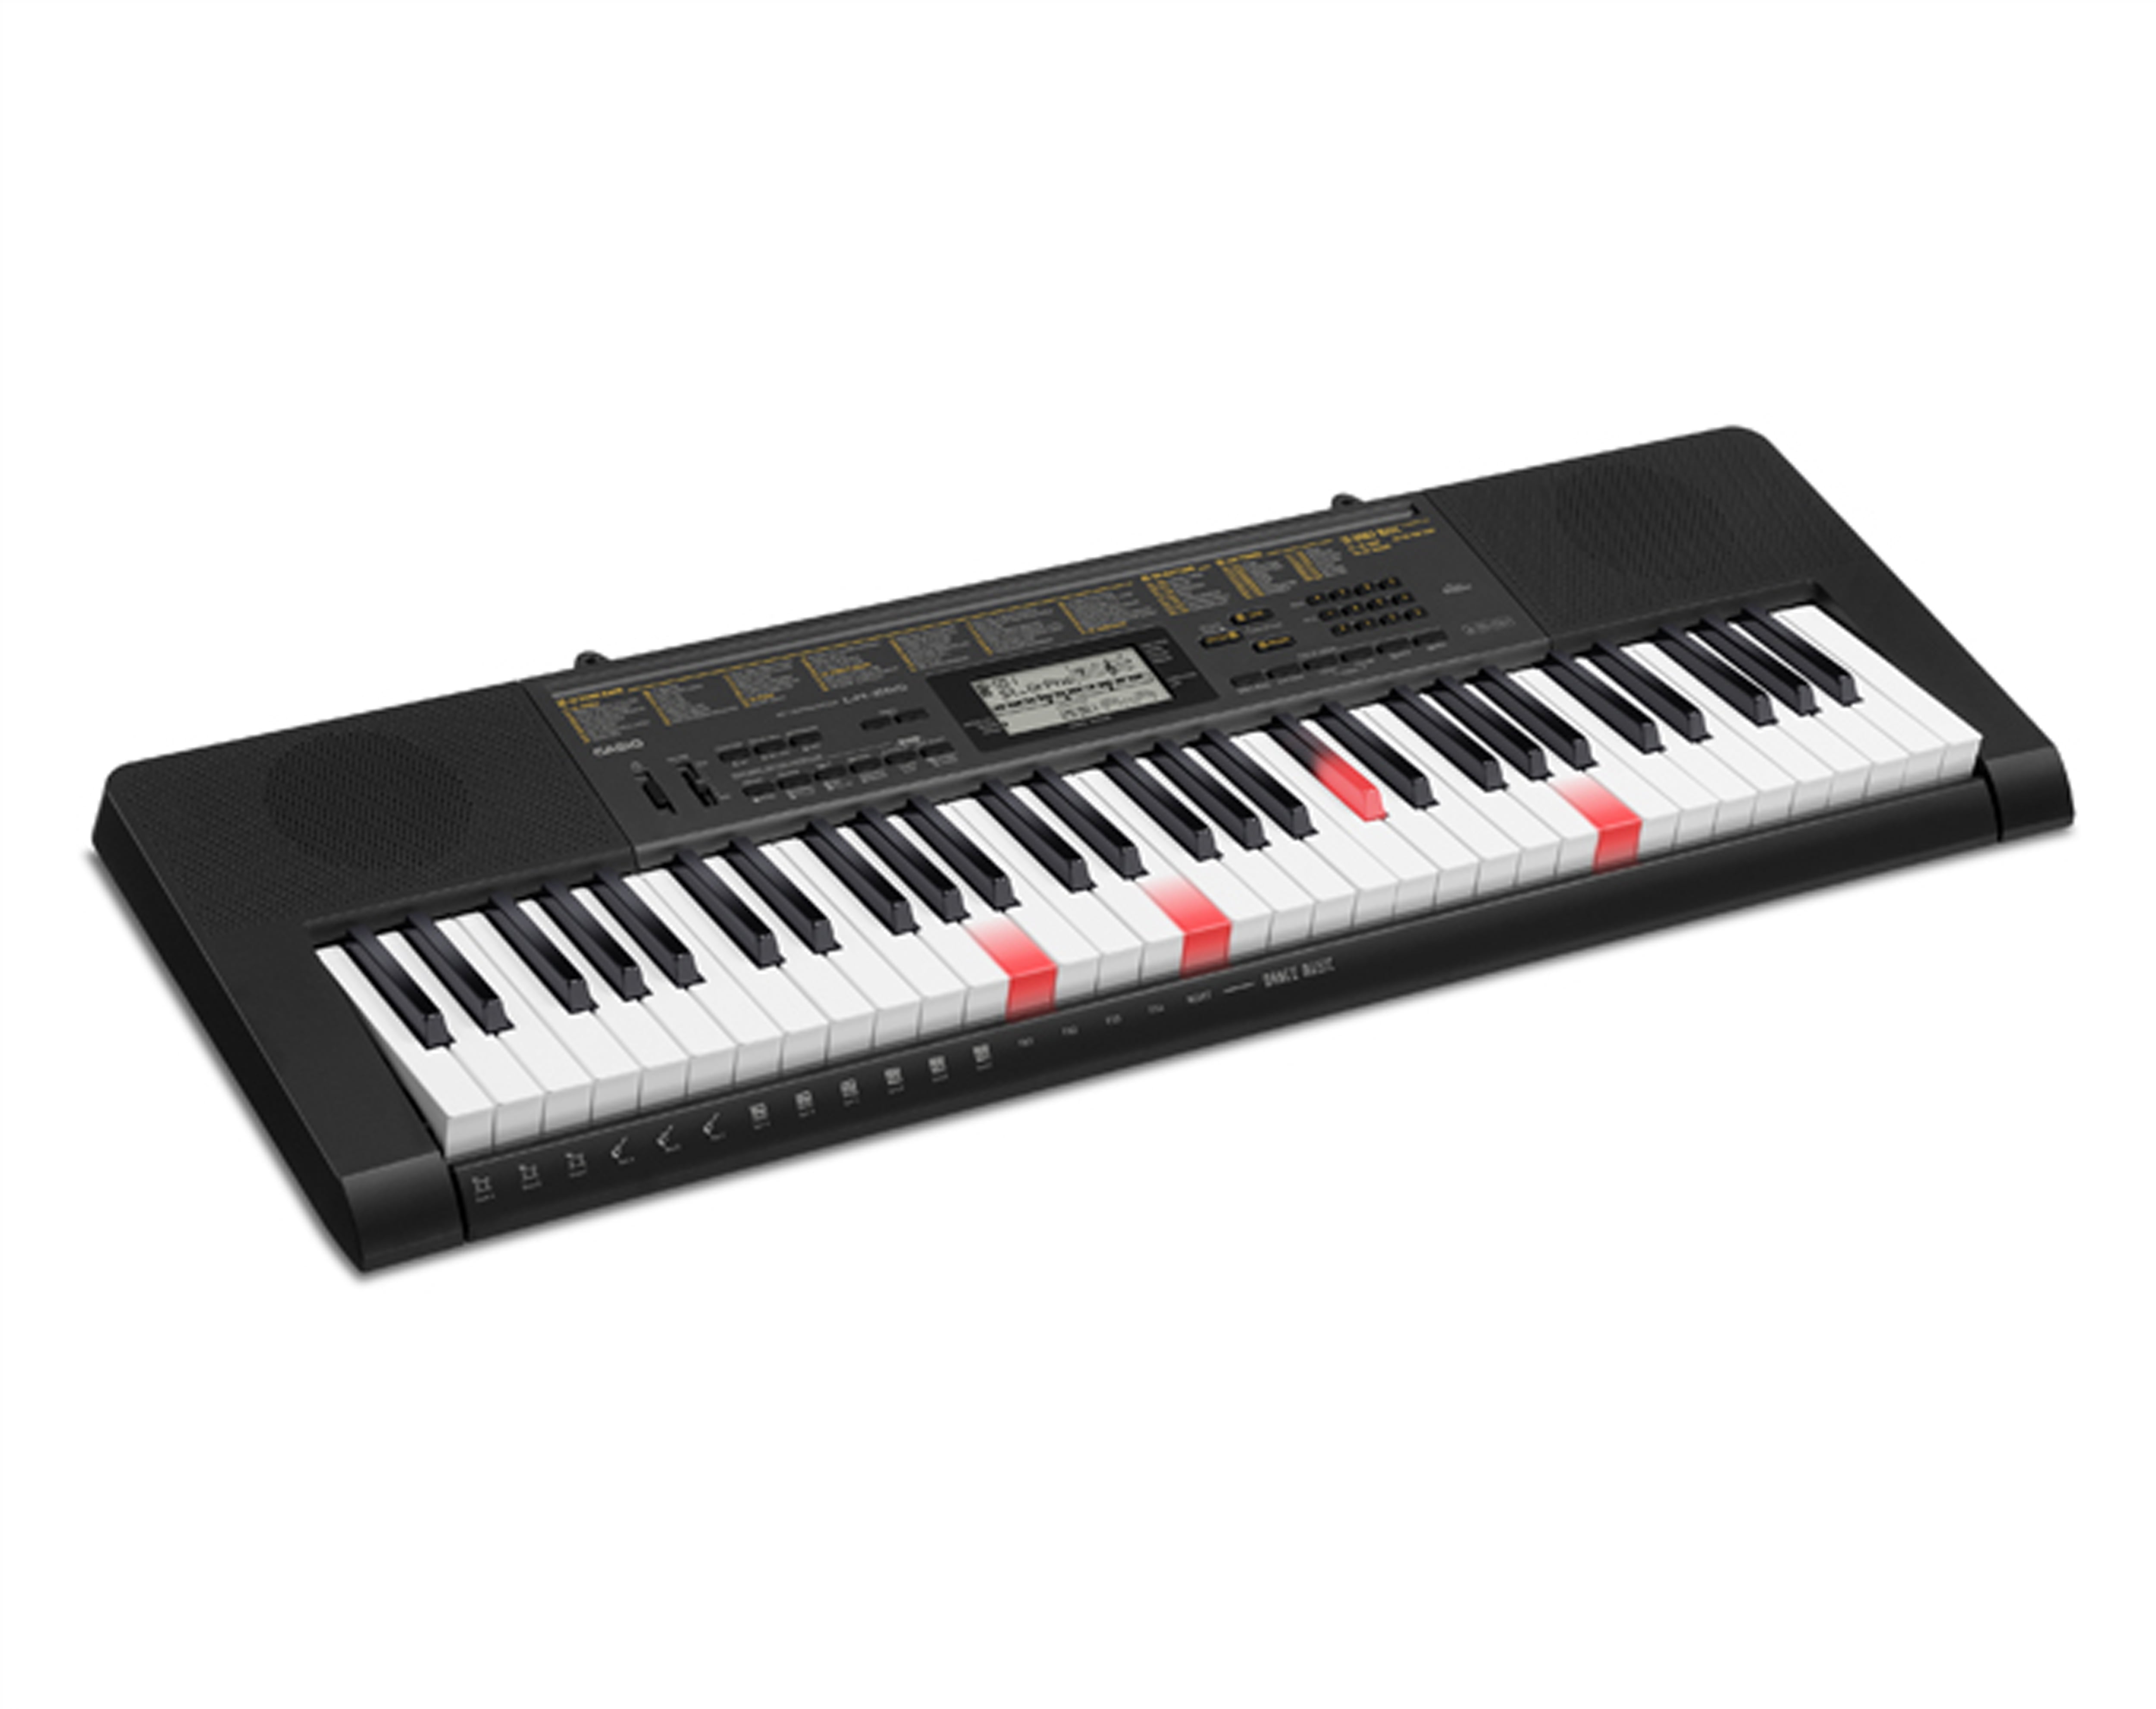 LK-265 PPK 61-Key Lighted Keyboard Pack with Stand, Headphones & Power - Walmart.com